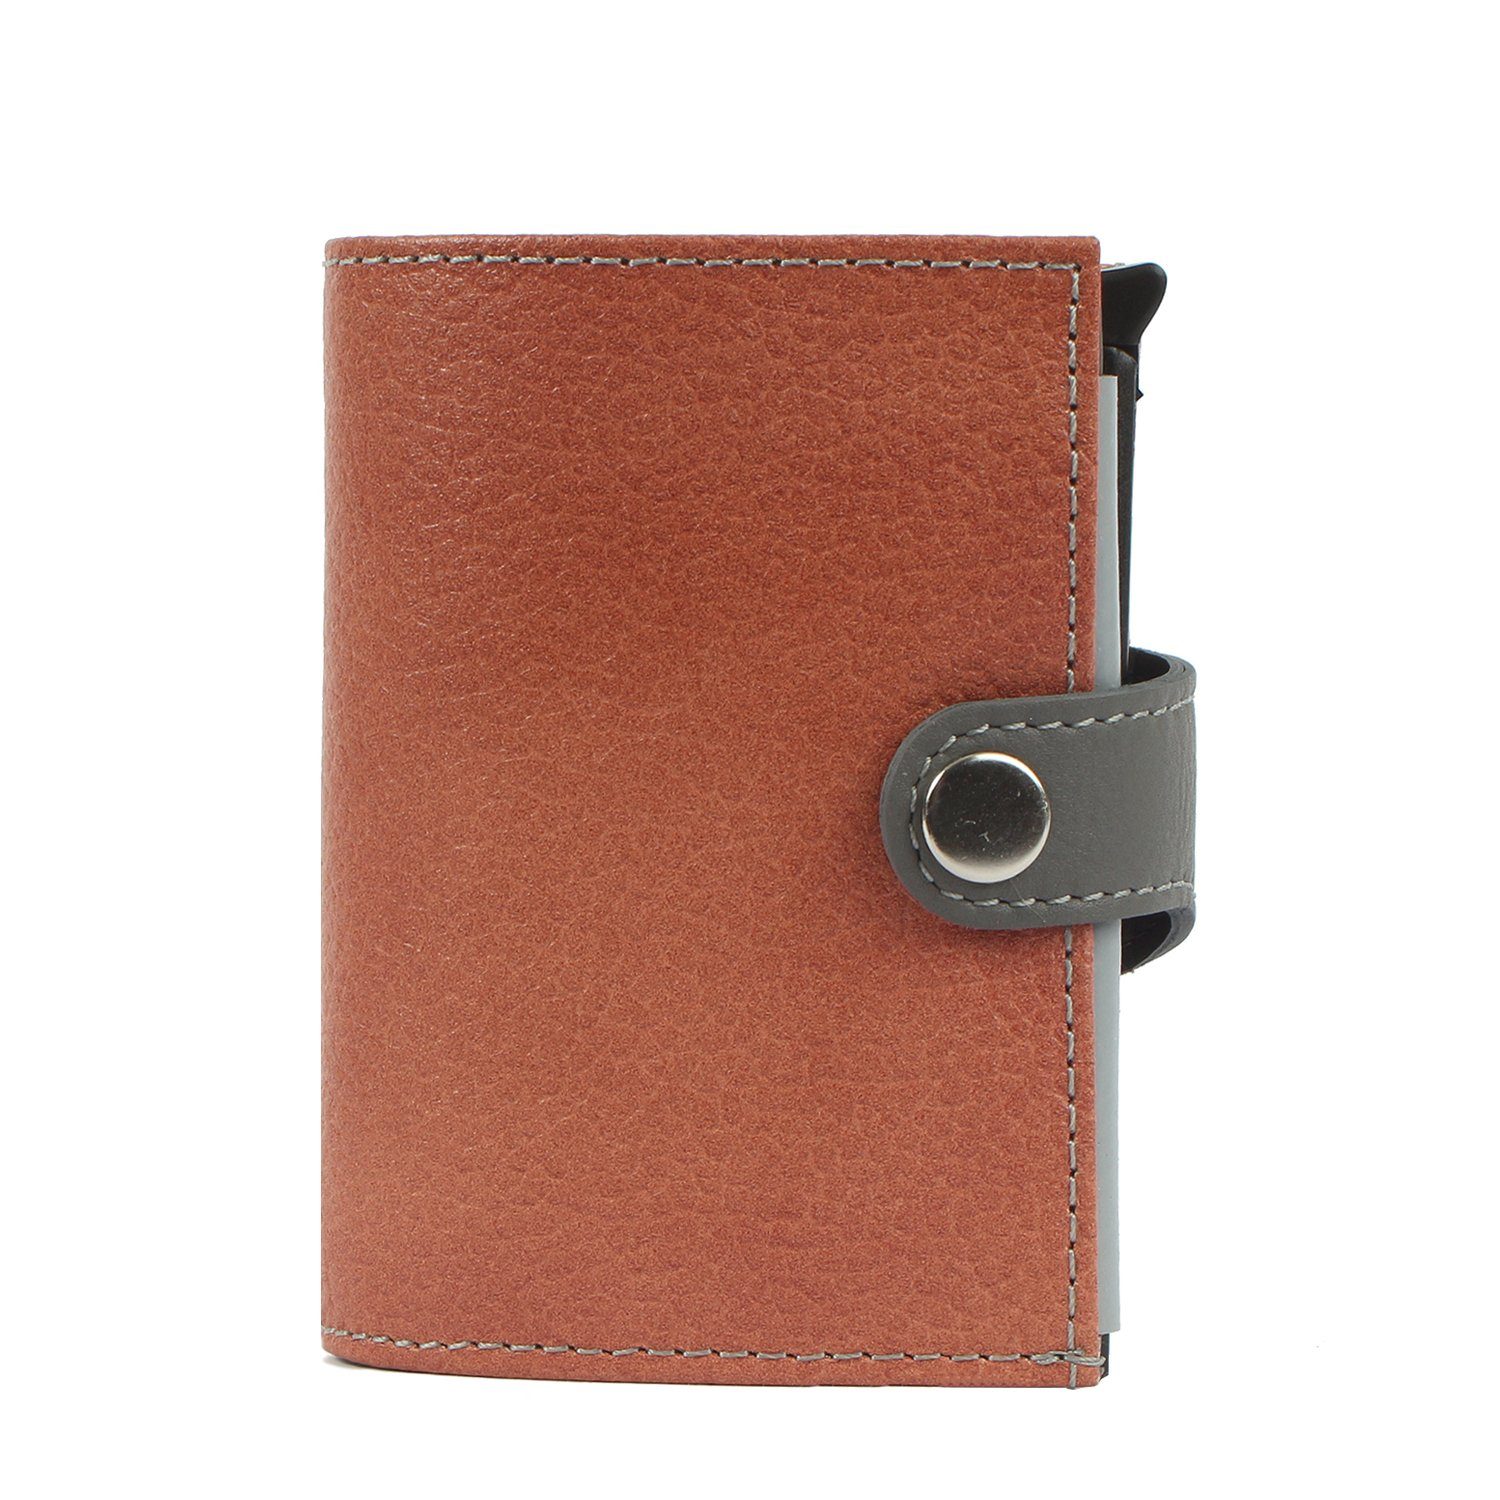 Margelisch Mini Geldbörse noonyu double leather, RFID Kreditkartenbörse aus Upcycling Leder salmon | Mini-Geldbörsen